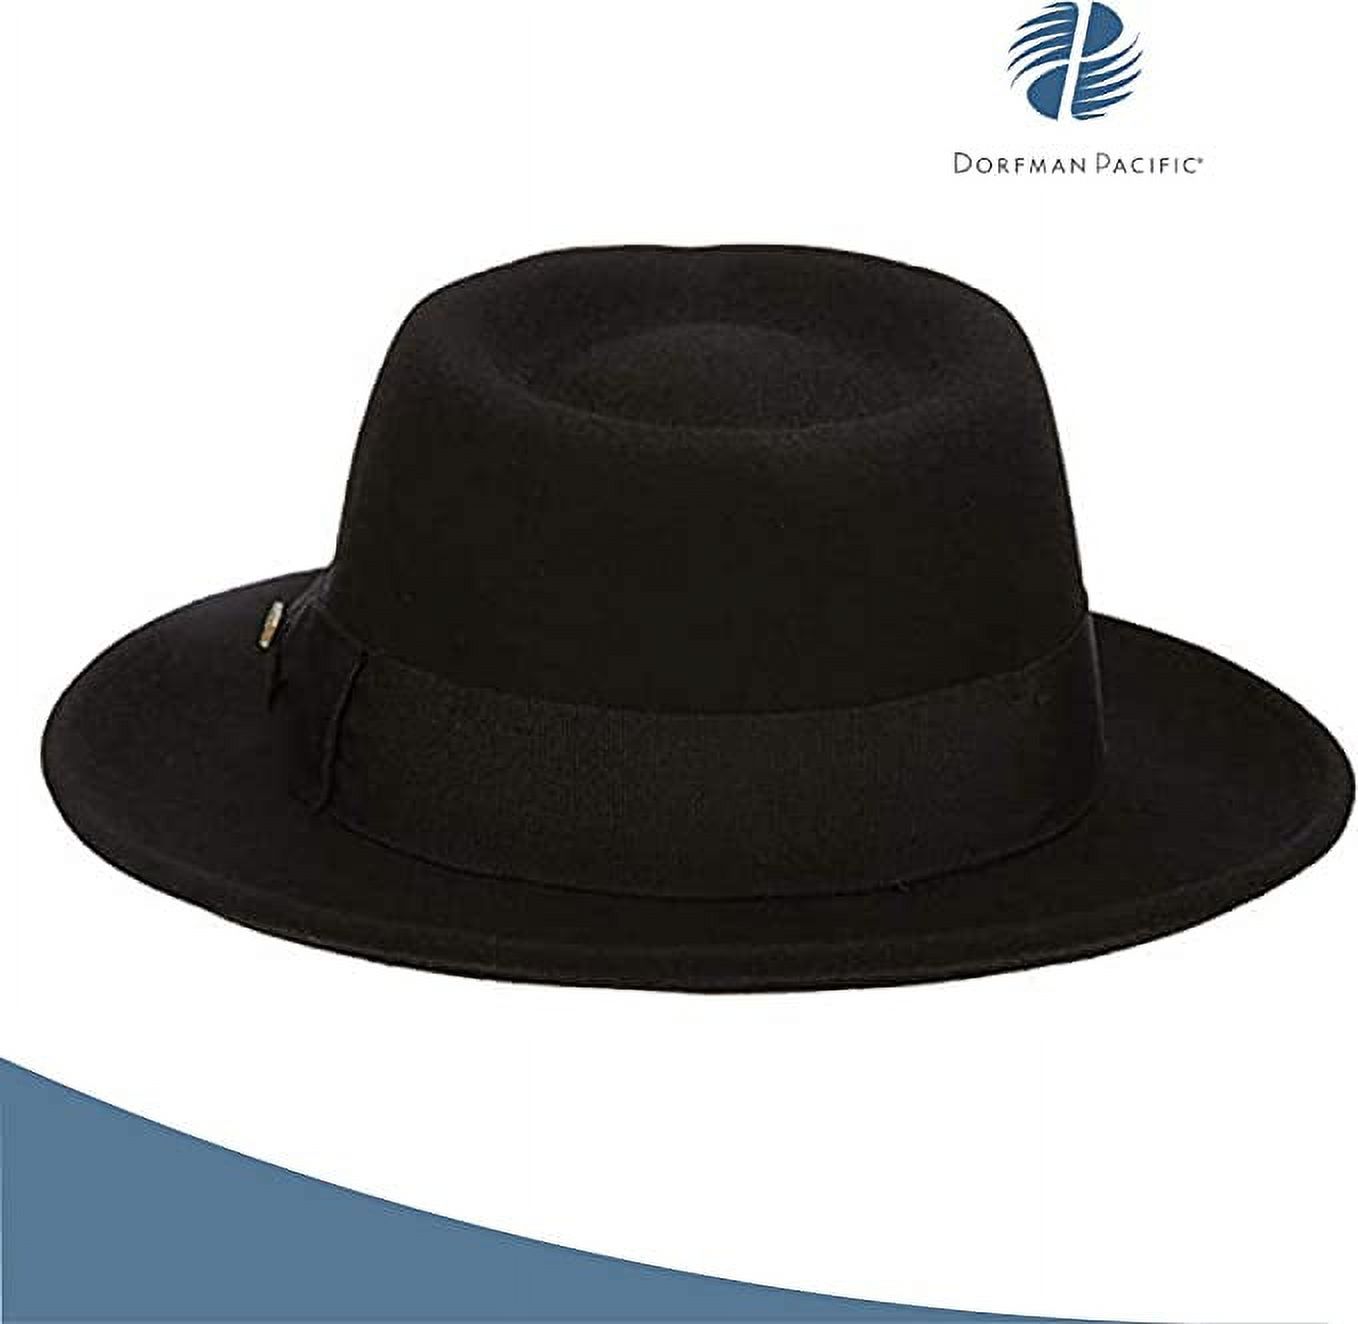 Scala Classico Men's Wool Felt Crushable Black Fedora Hat - image 3 of 5